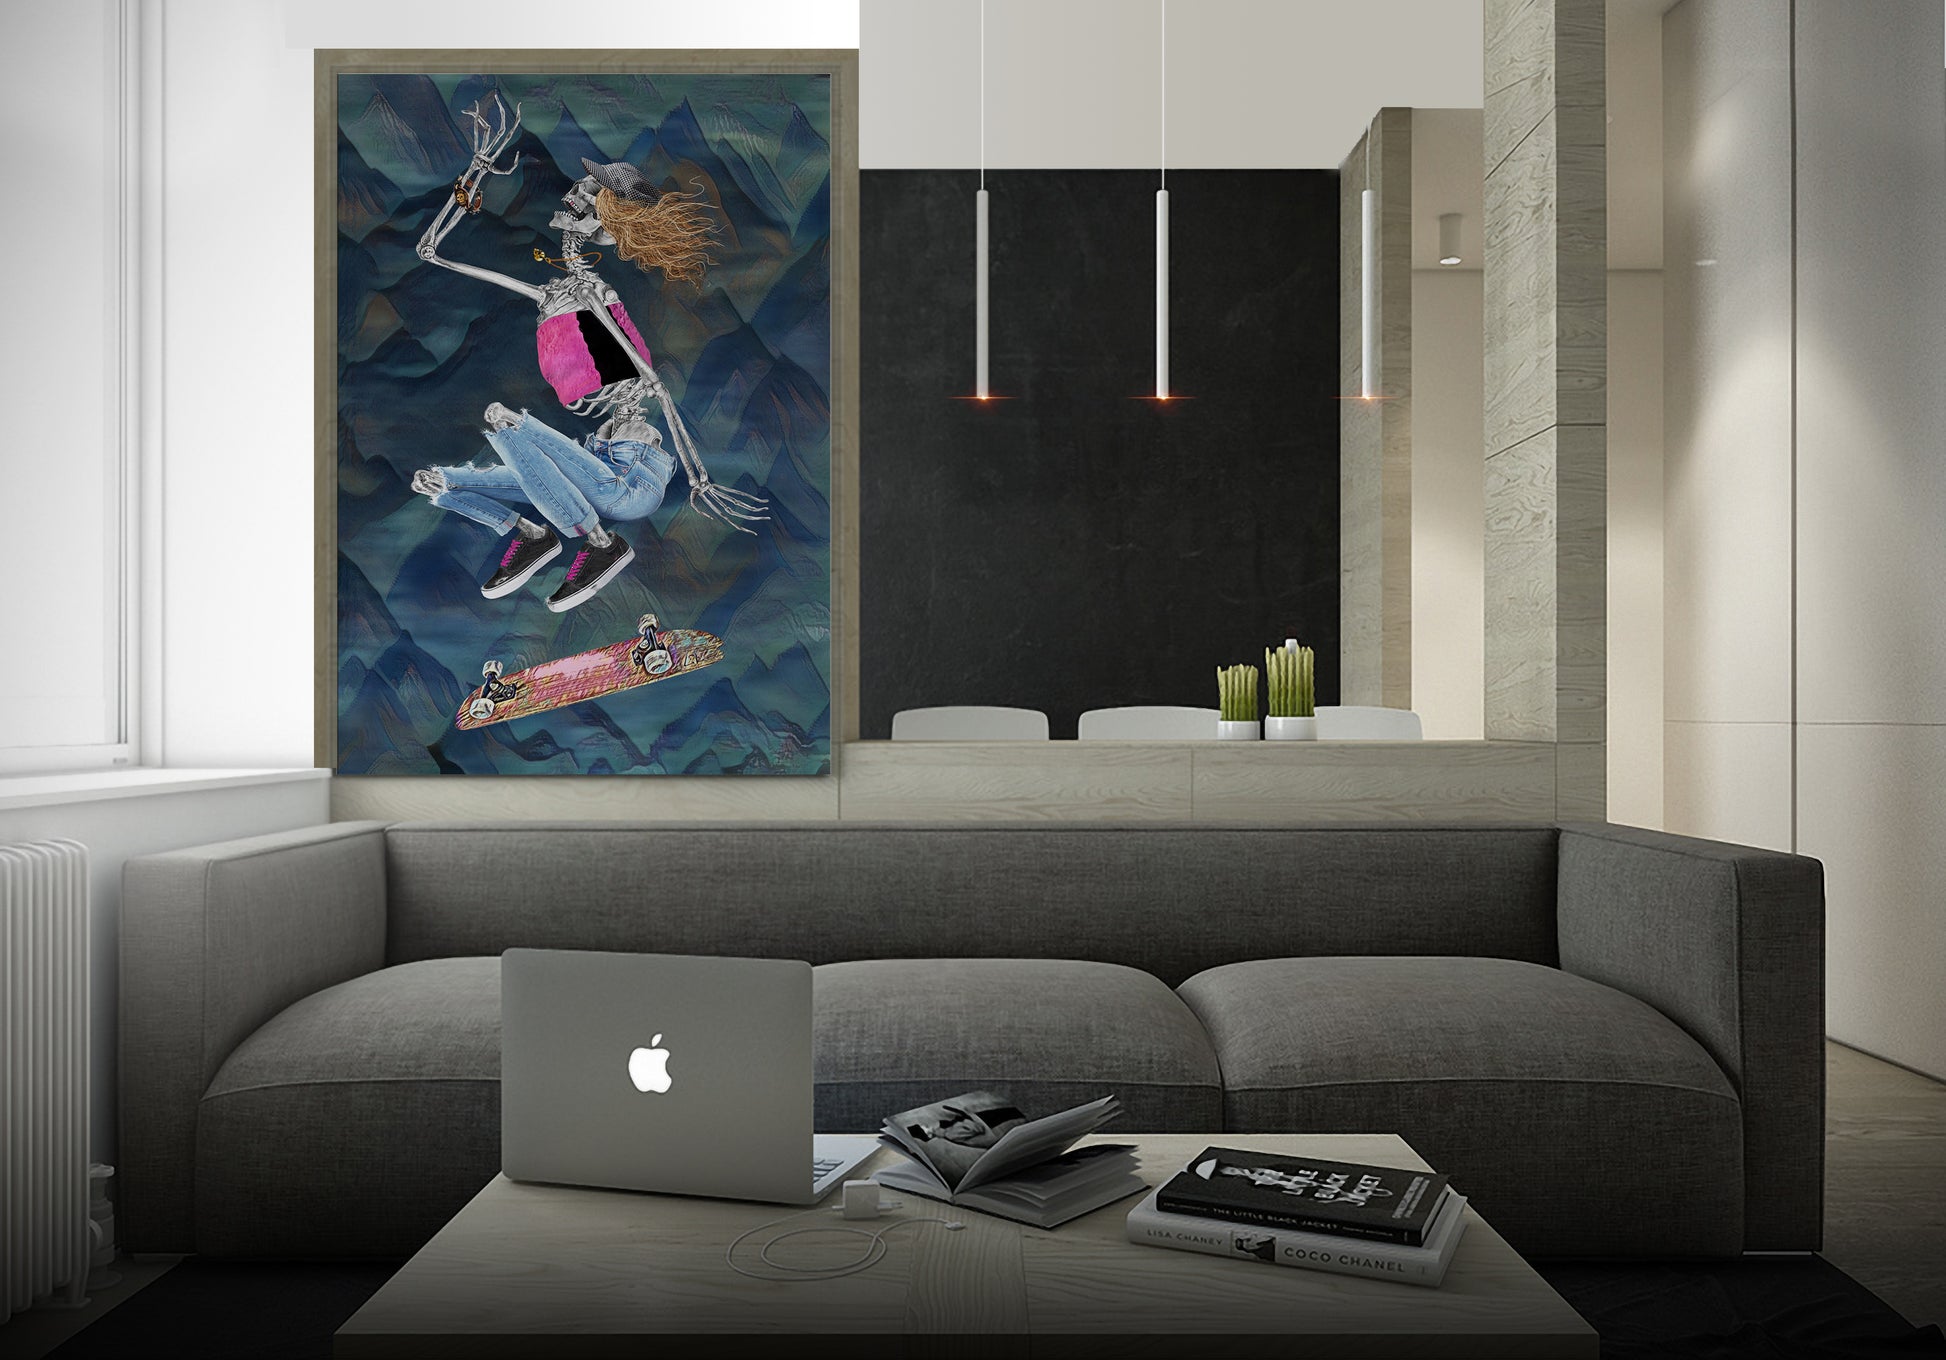 Bonita Kickflip mixed media art by Doug LaRue on a living room wall